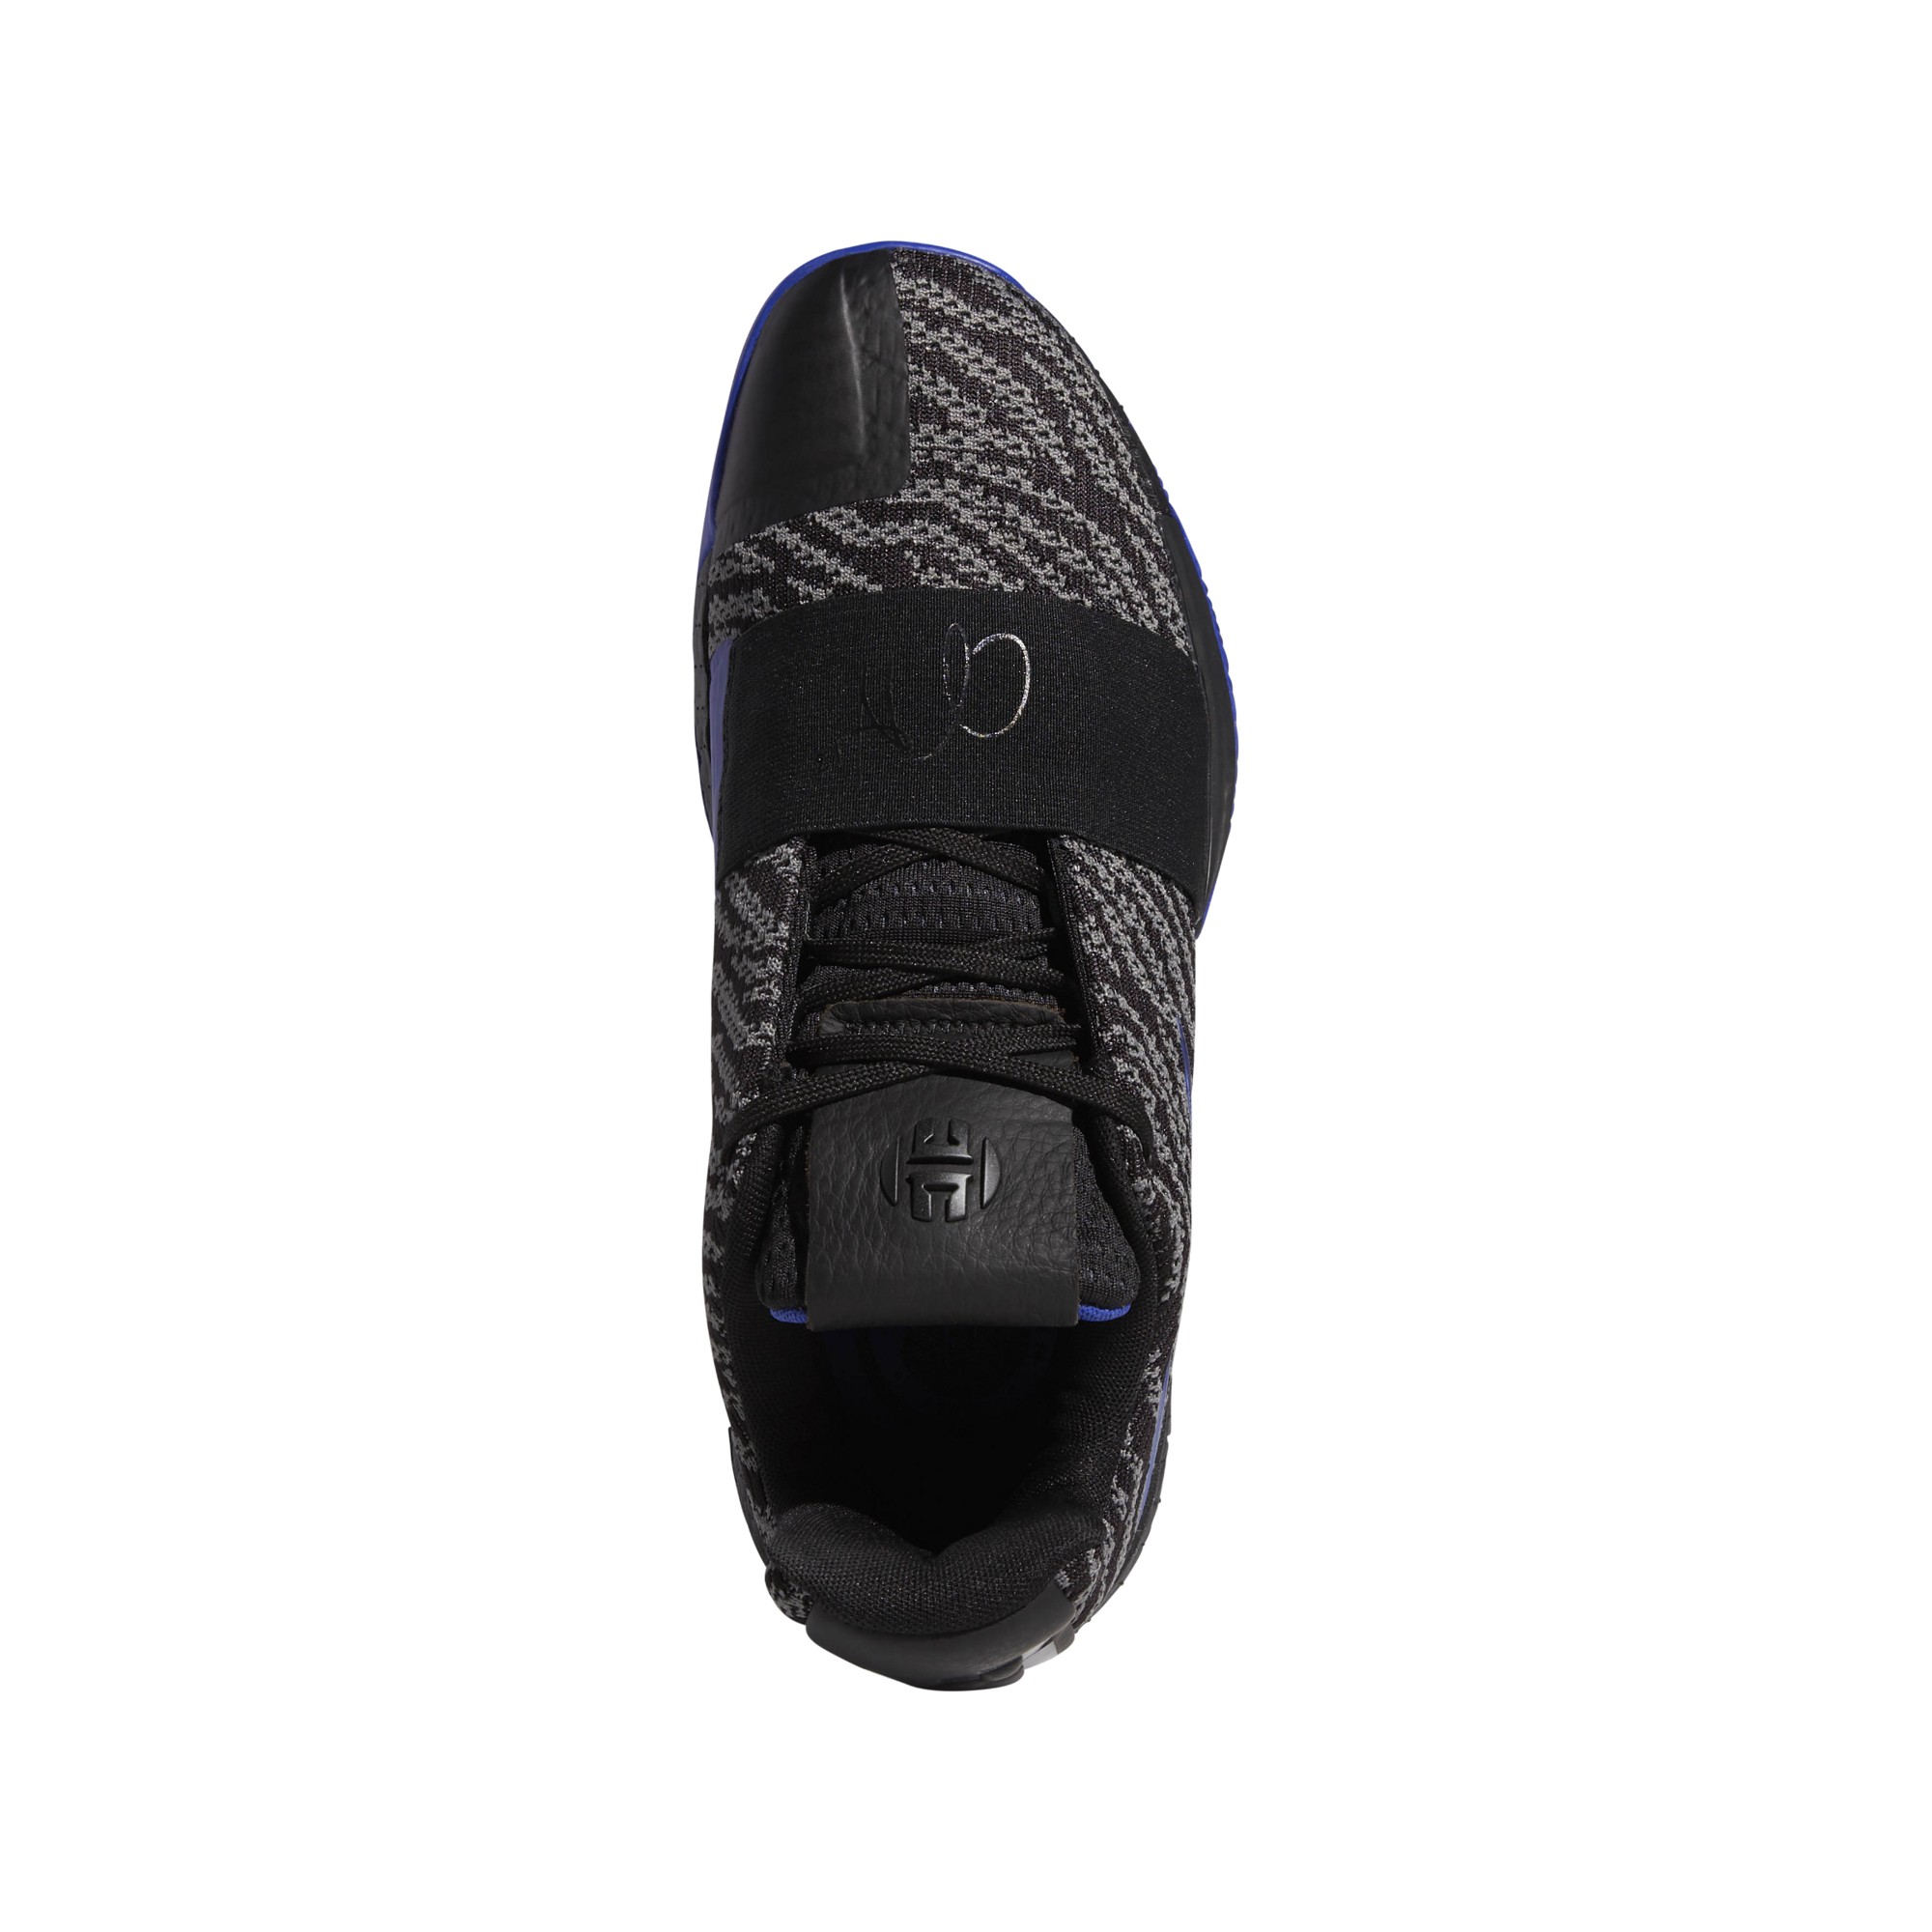 SCARPE ADIDAS HARDEN VOL. 3 \\"BLACK ACTIVE BLUE\\" G26811 Adidas Scarpe Tecniche - Basket 112,00 €